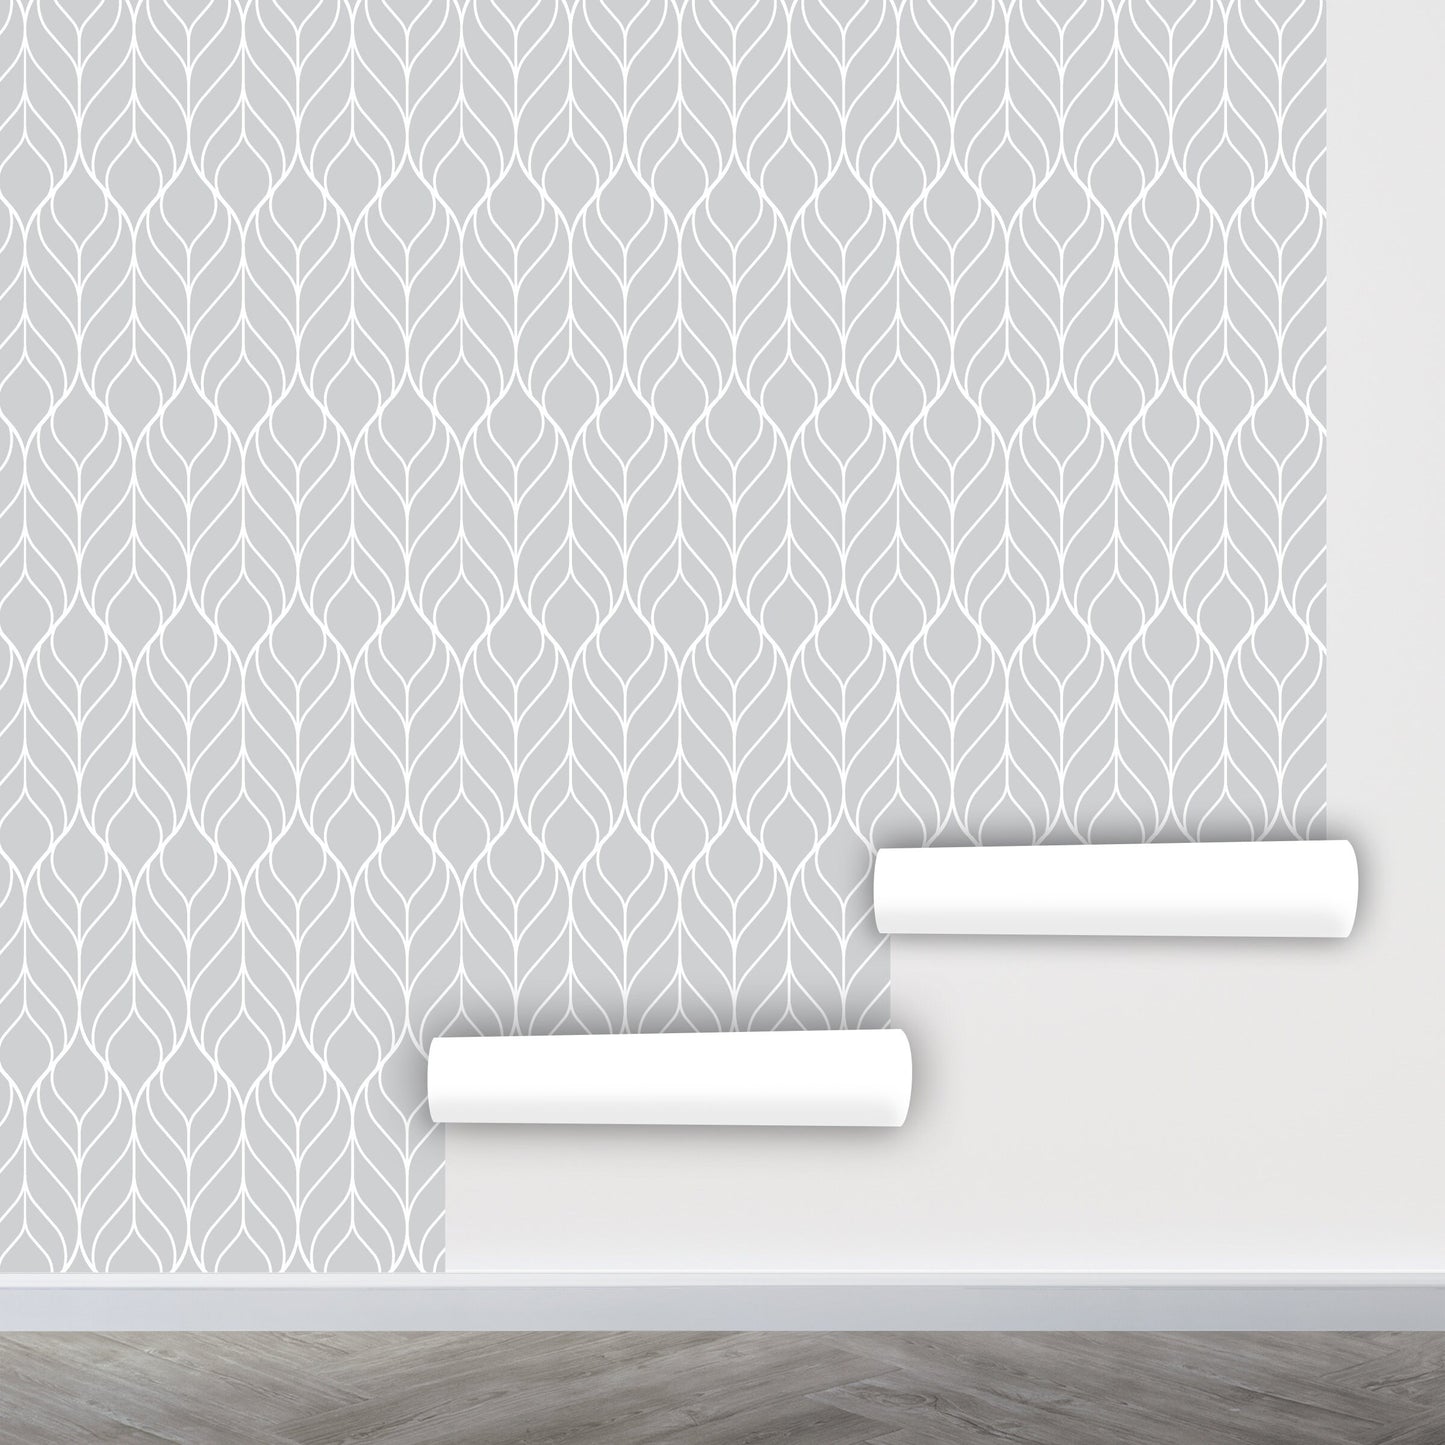 Herringbone Wallpaper Peel and Stick, Geometric Wallpaper, Gray Wallpaper, Removable Wall Paper